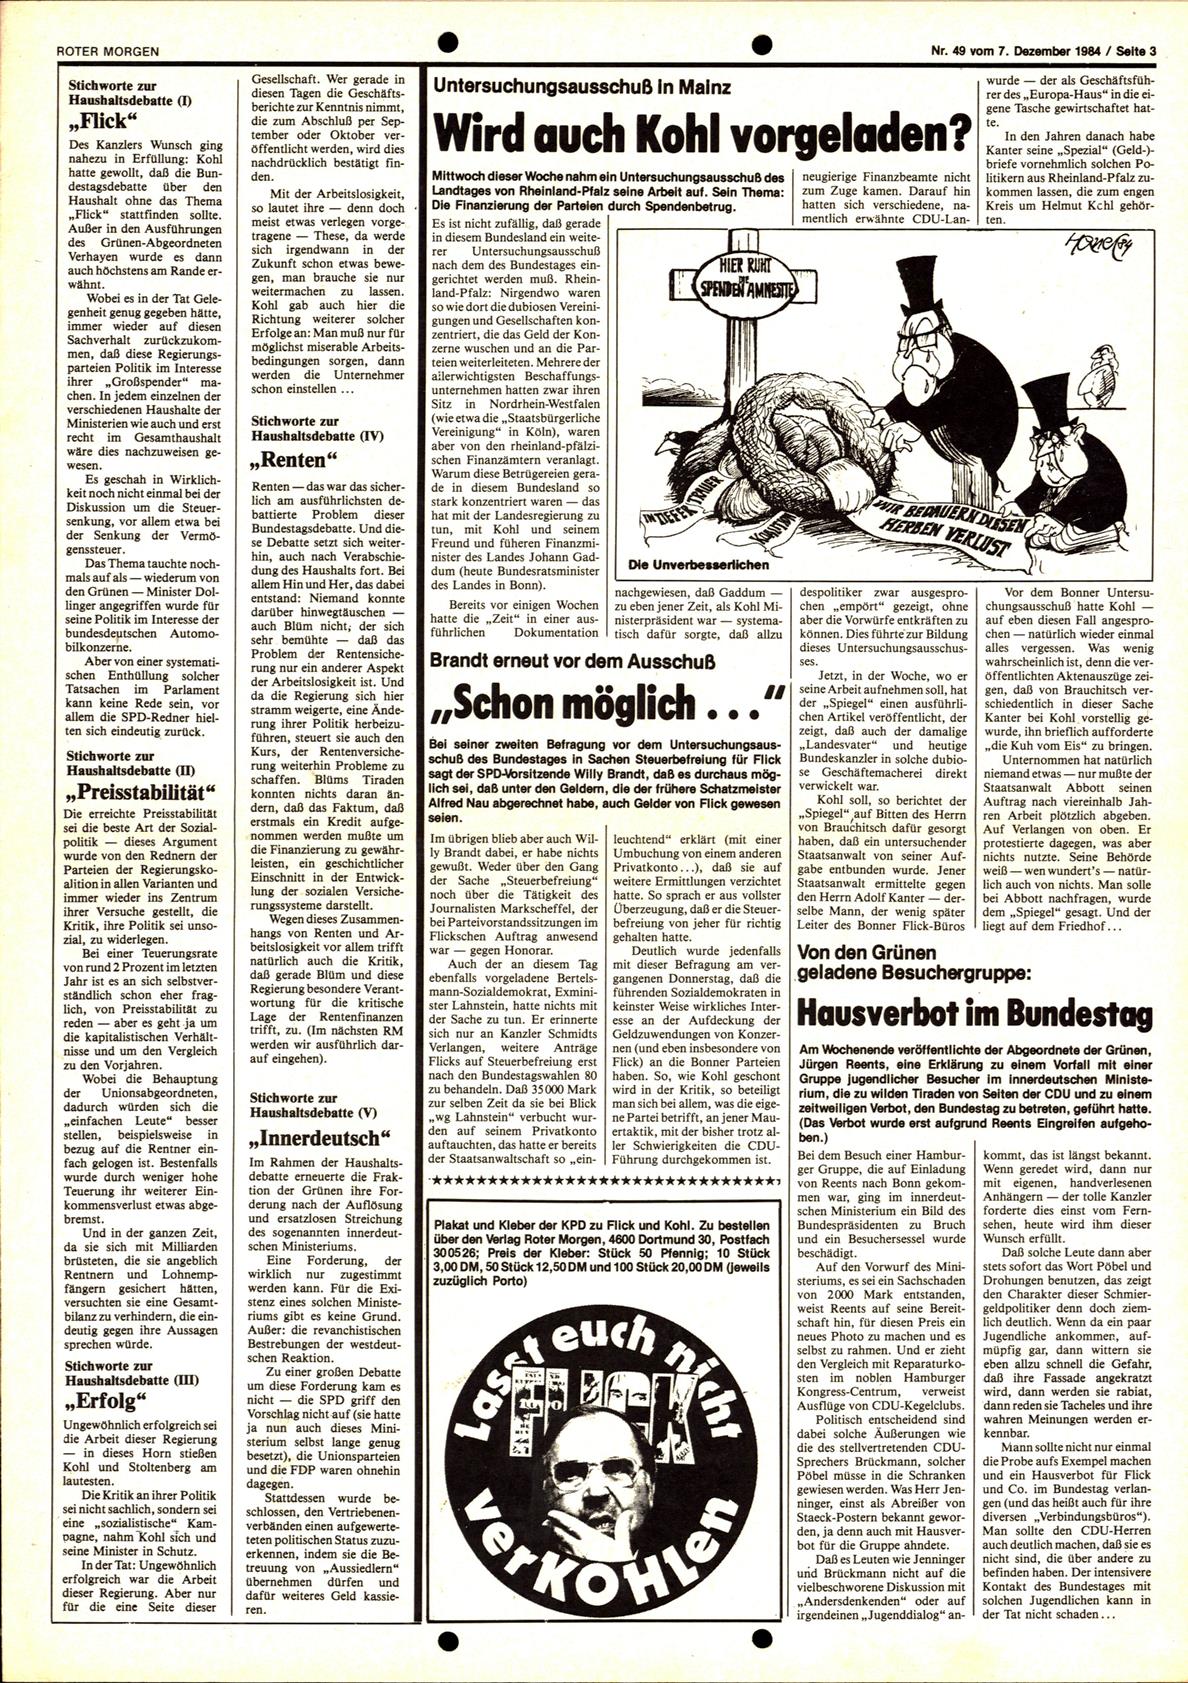 Roter Morgen, 18. Jg., 7. Dezember 1984, Nr. 49, Seite 3